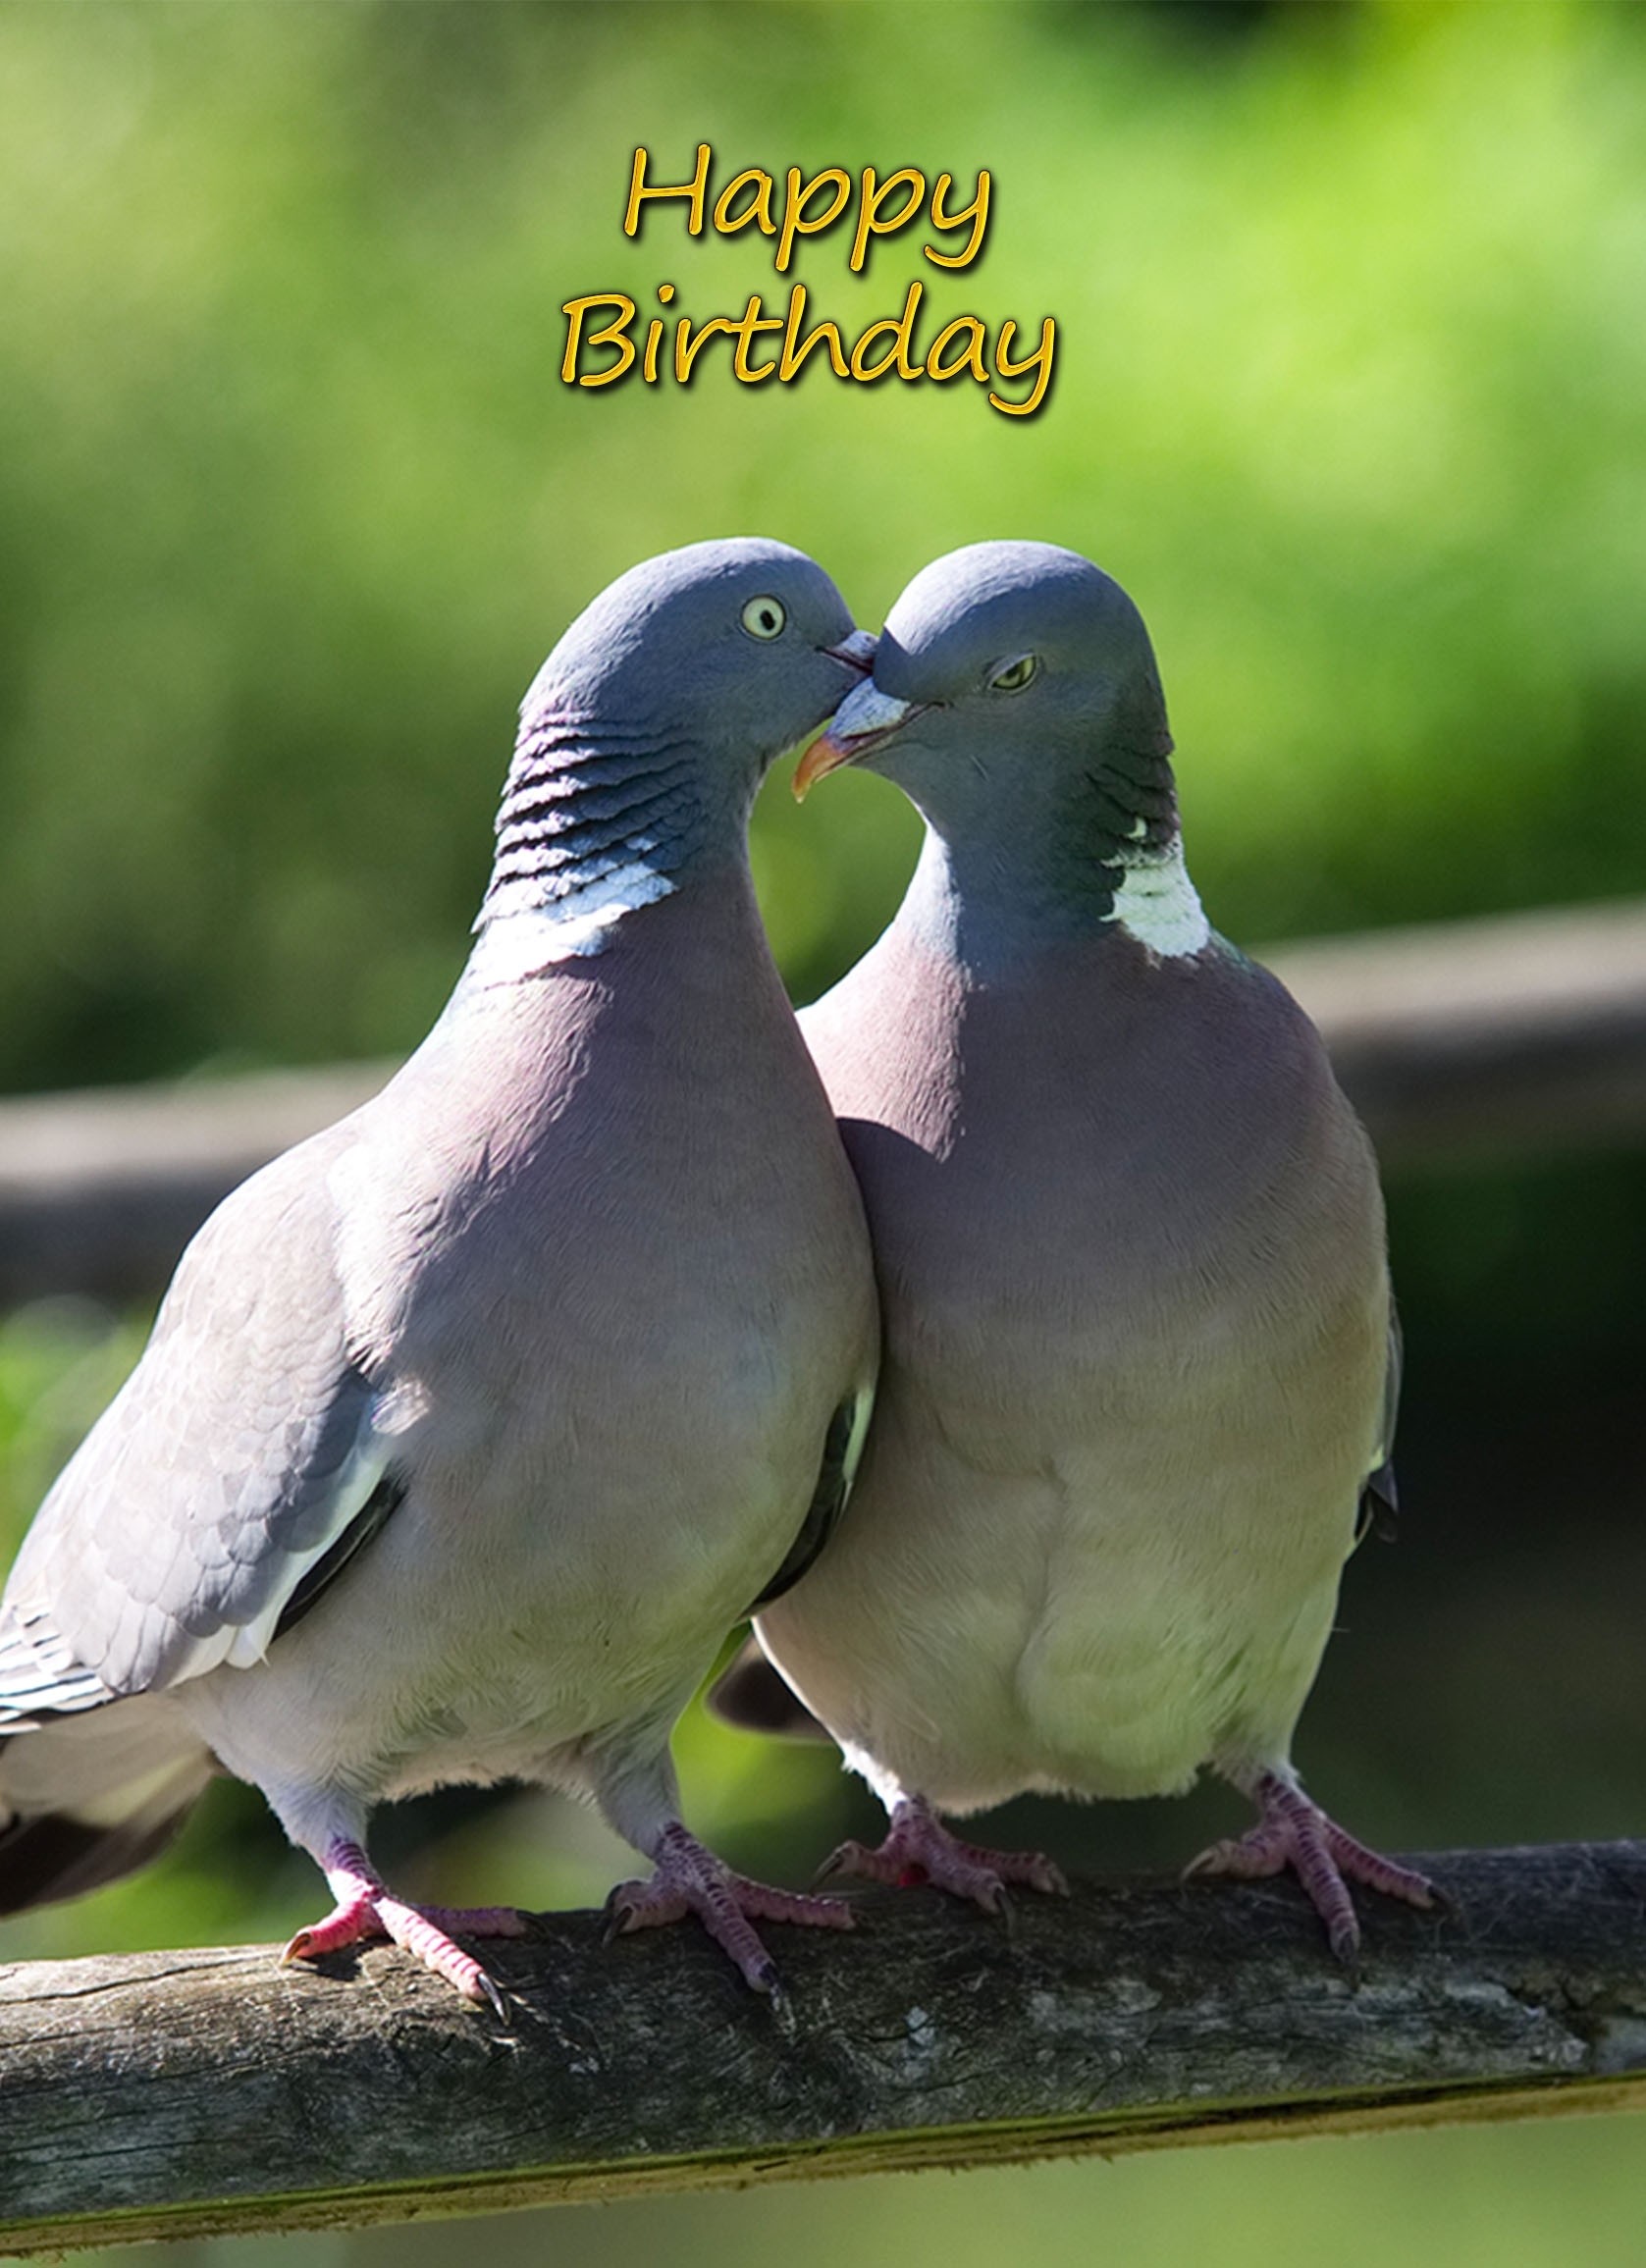 Racing Homing Pigeon Birthday Card